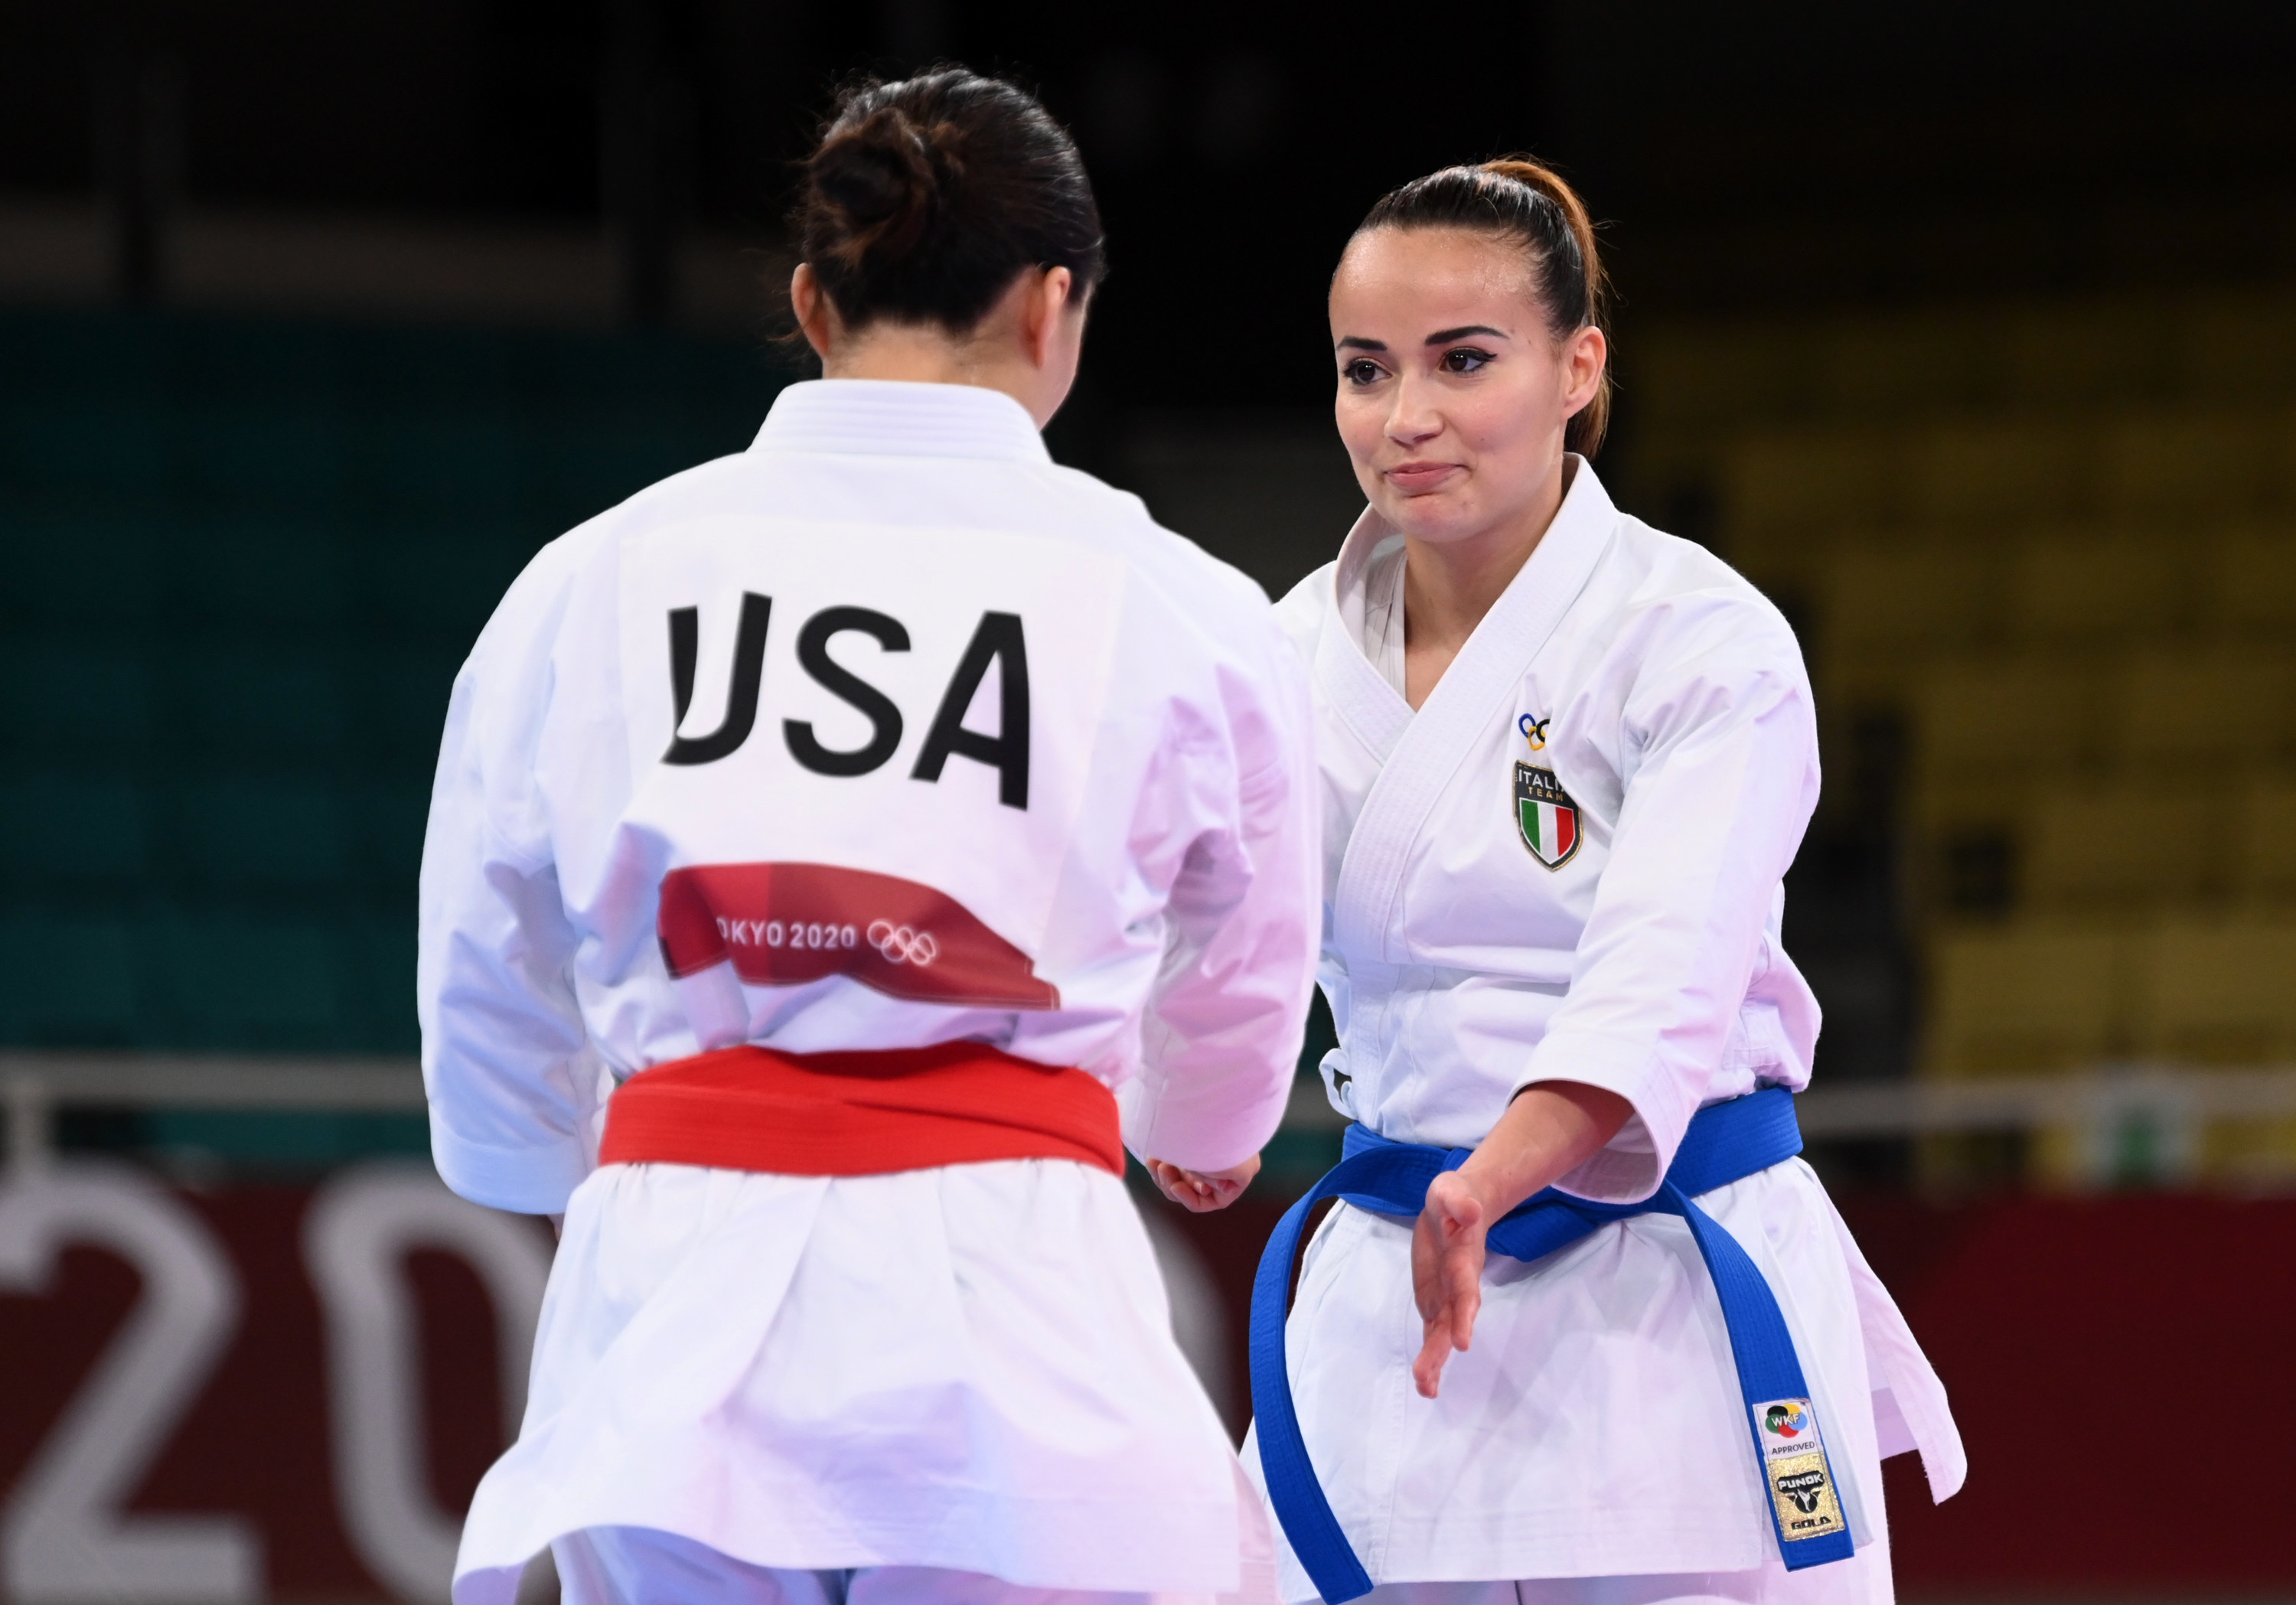 Kokumai of the United States interacts with Viviana Bottaro of Italy after Bottaro won the match.